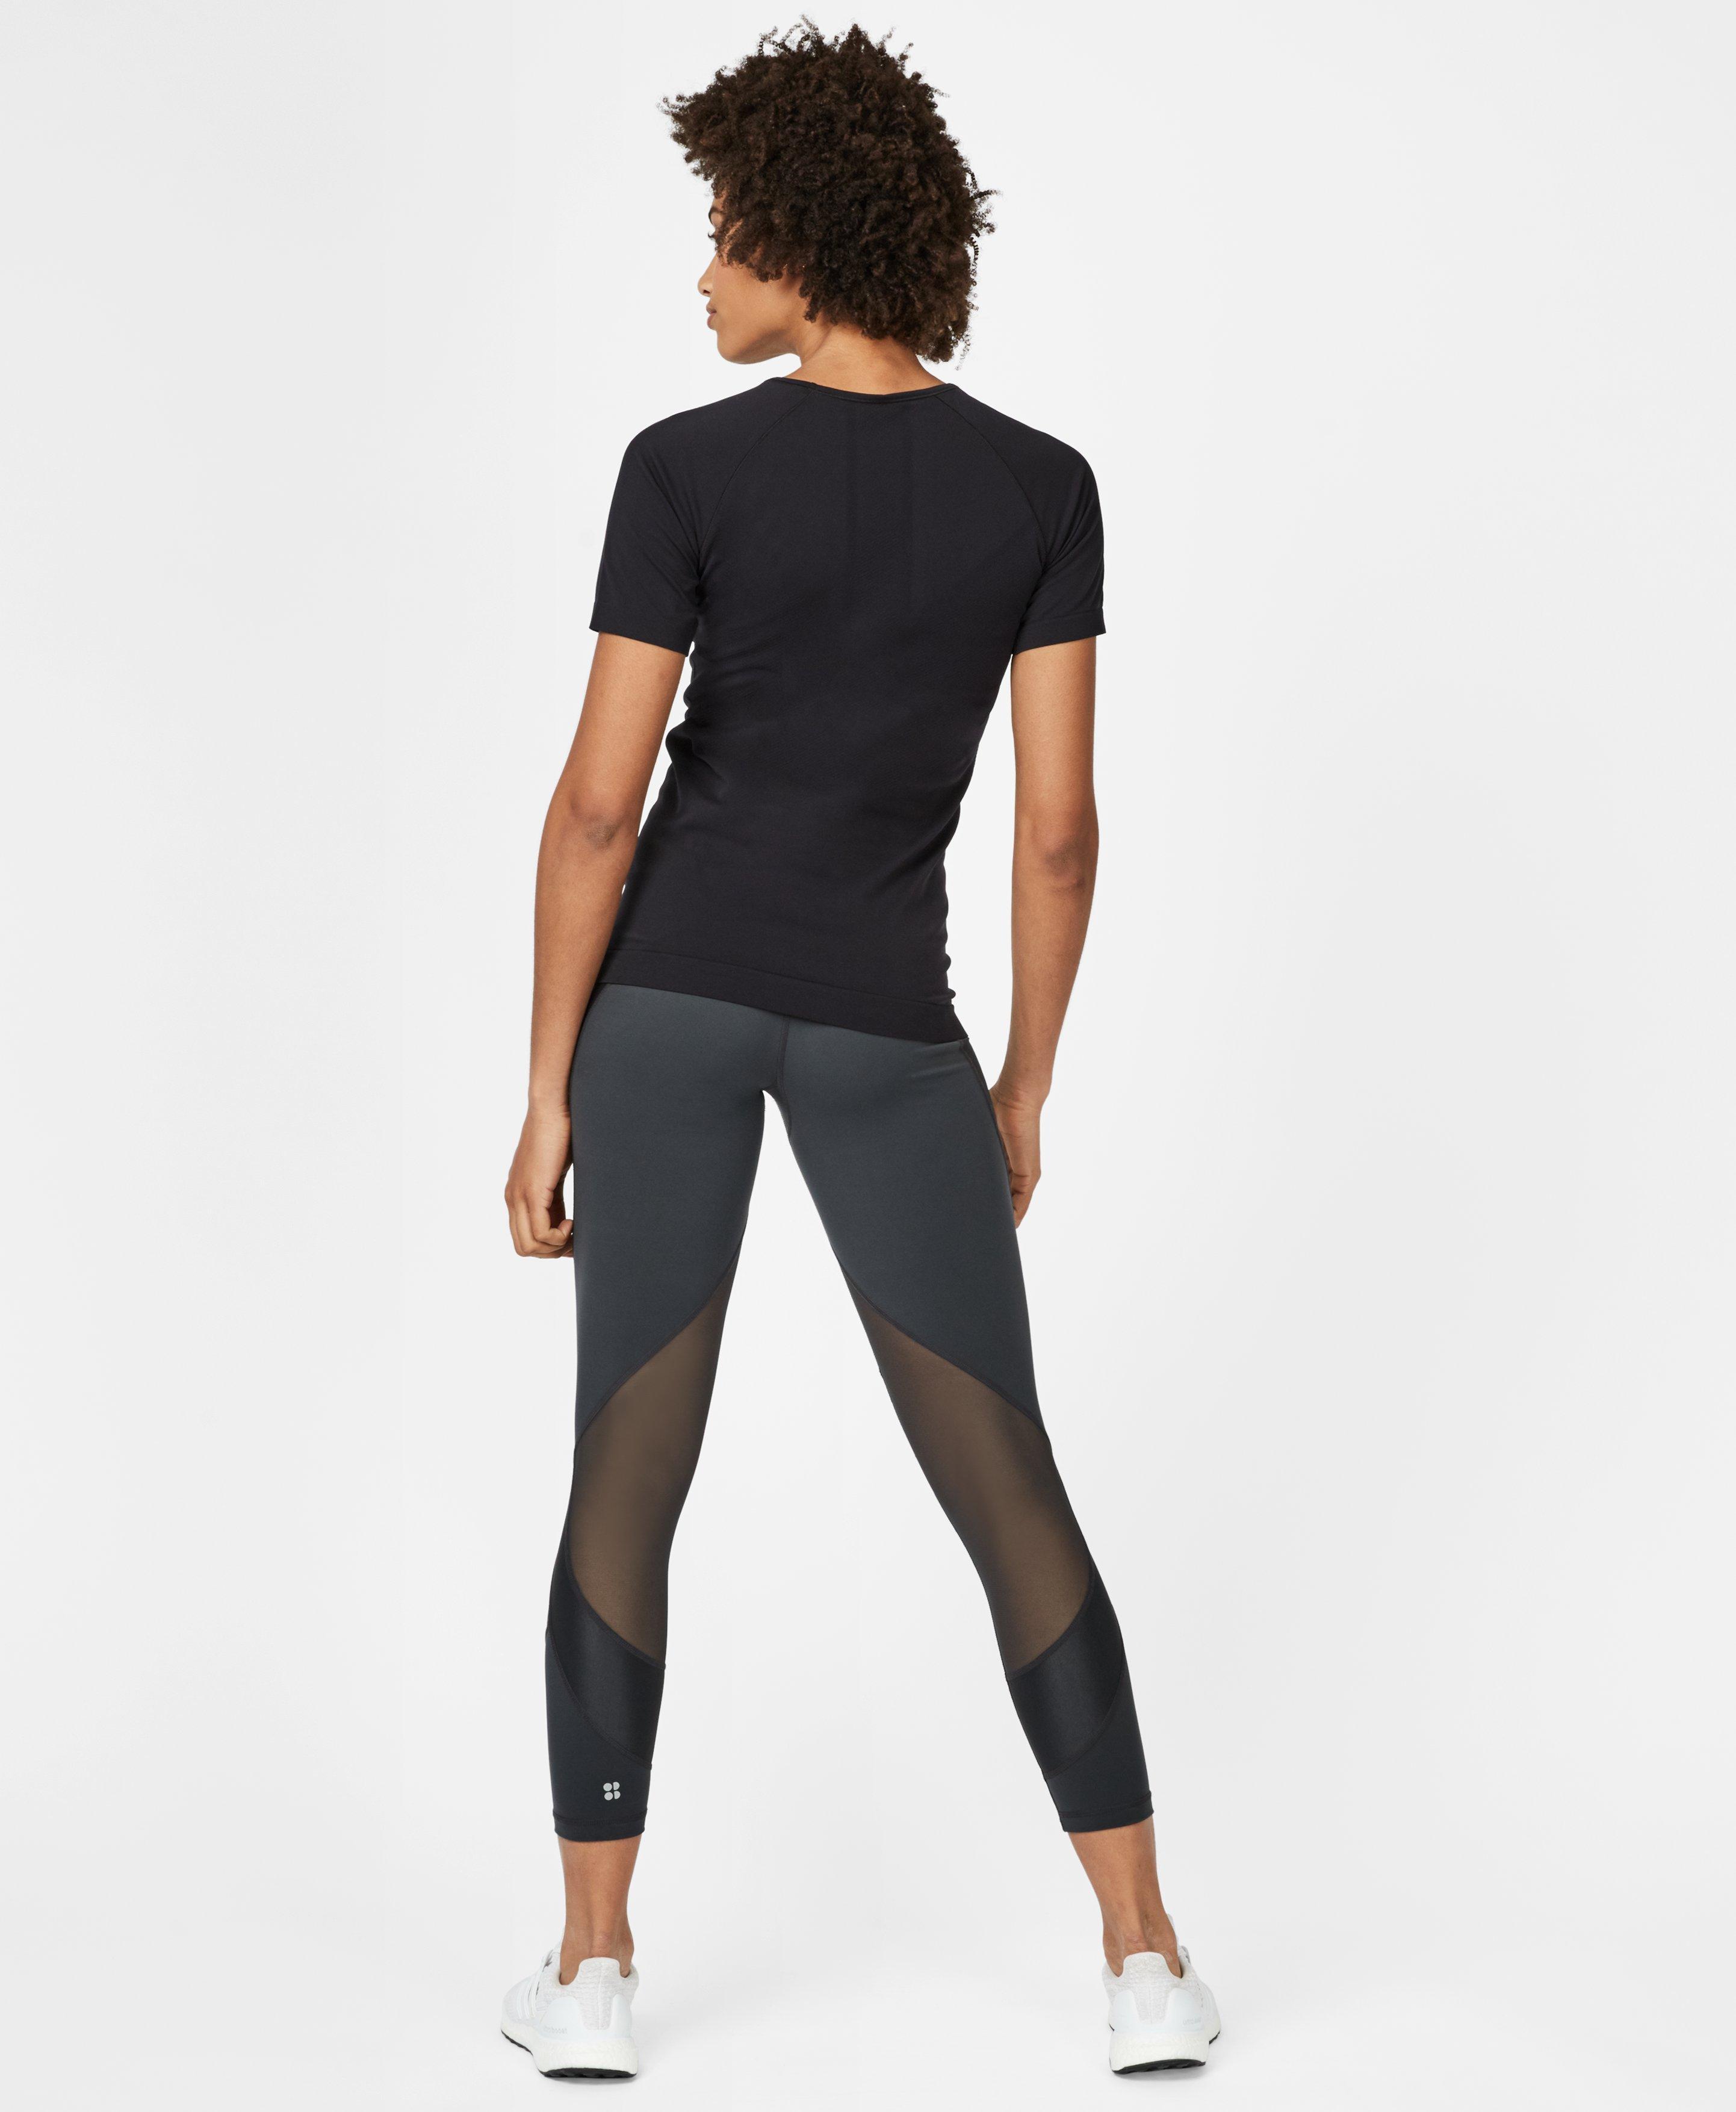 Sweaty Betty Athlete Seamless Workout T-shirt in Black - Lyst